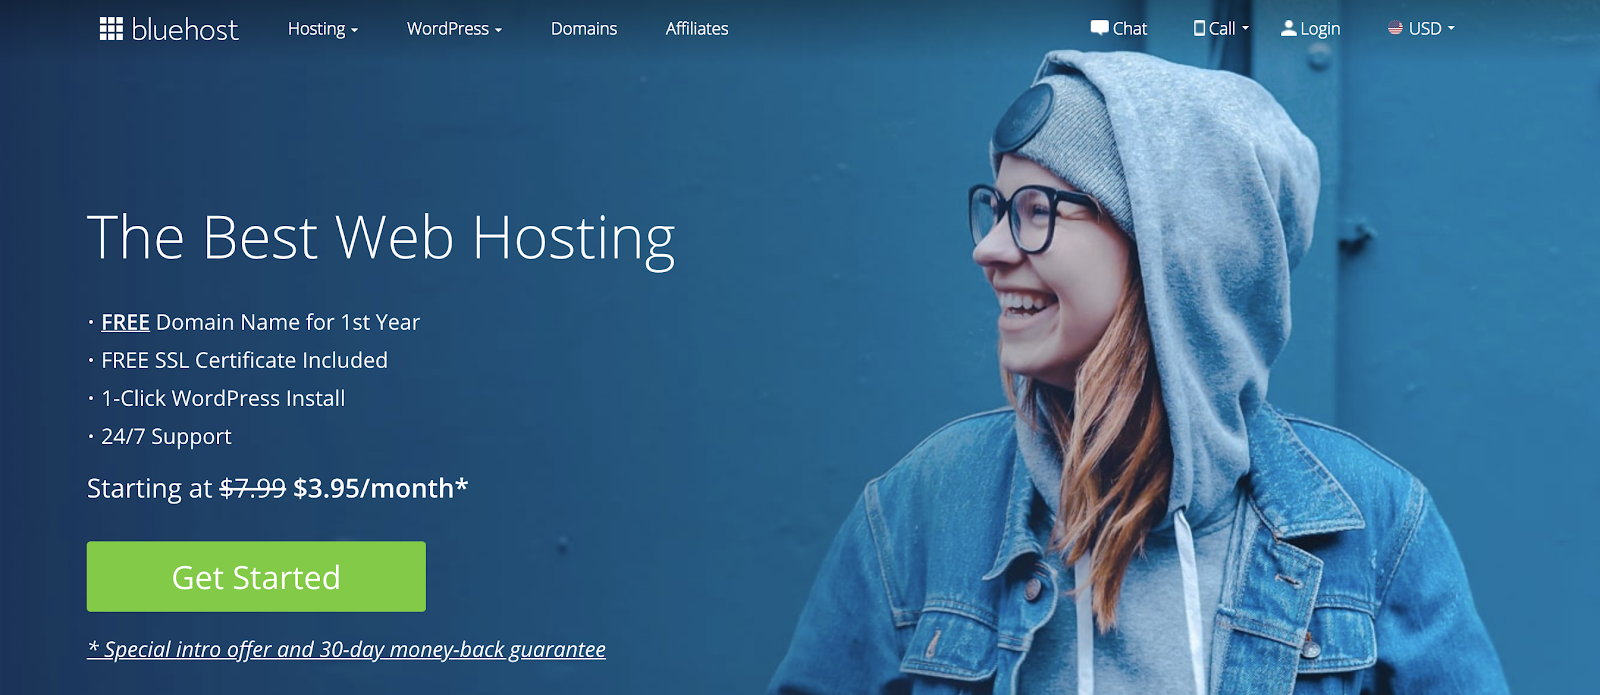 WordPress Hosted Blog Bluehost Homepage